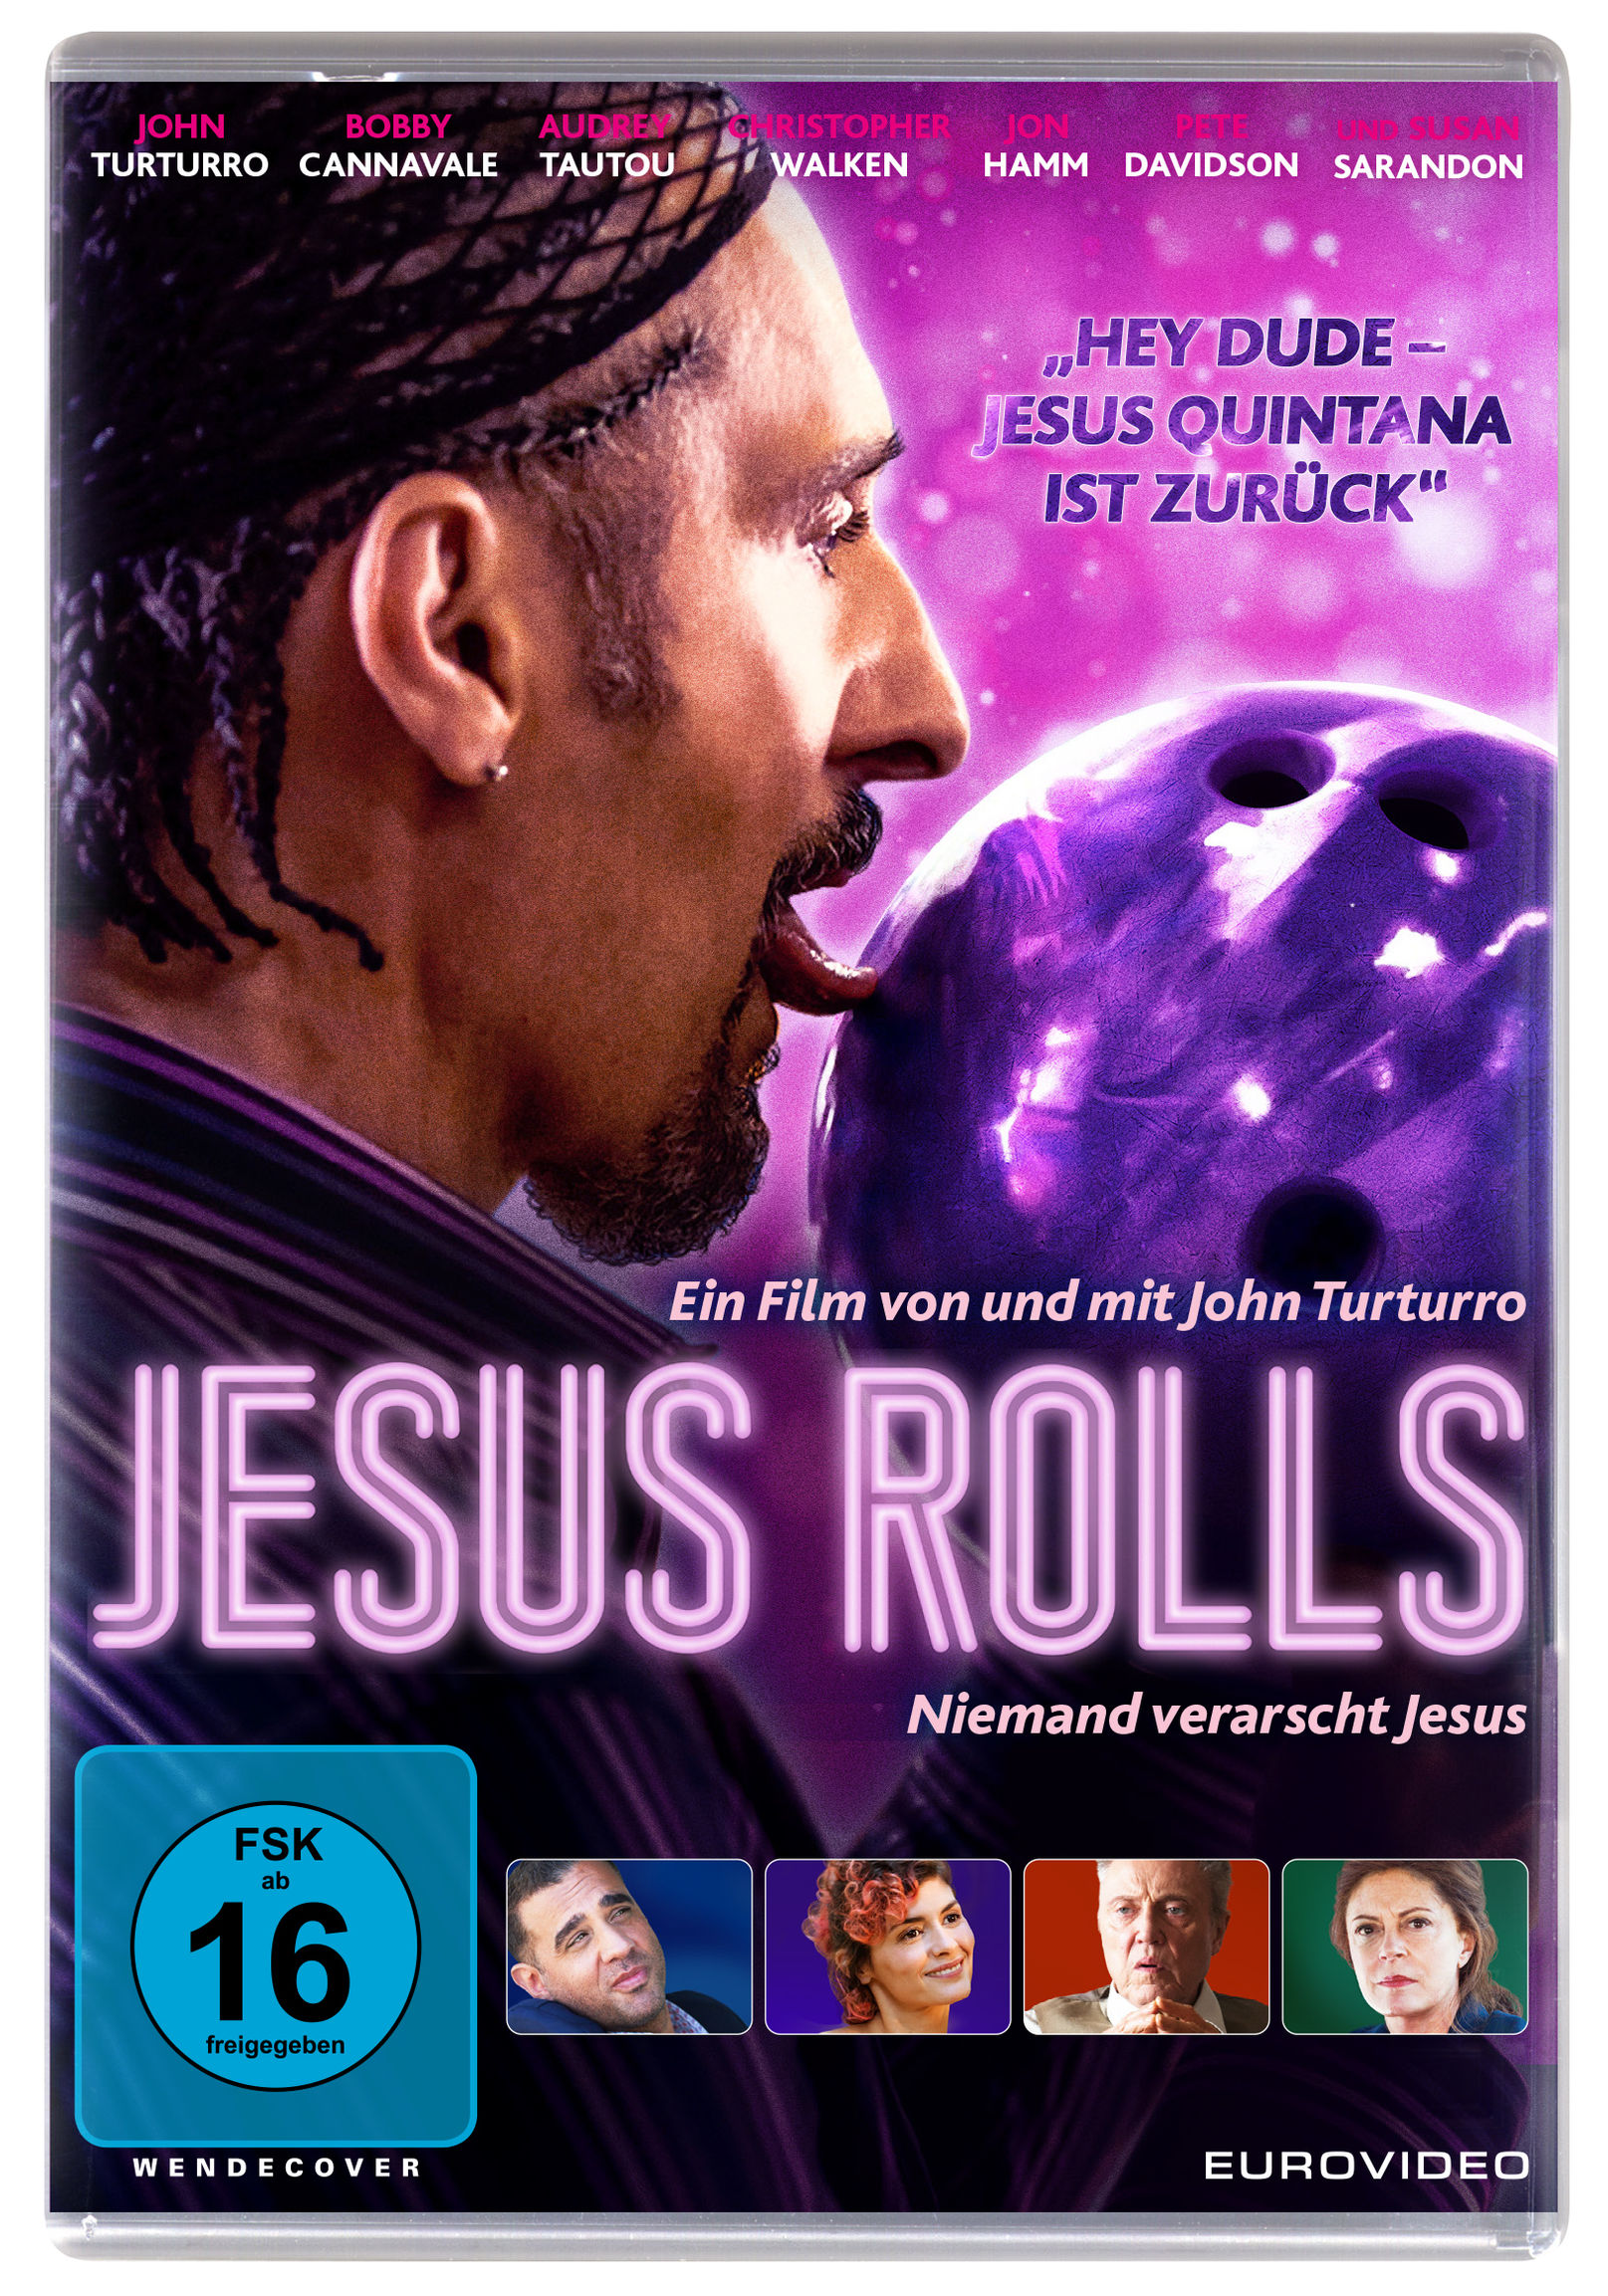 Jesus Rolls - Niemand verarscht Jesus DVD | Weltbild.at